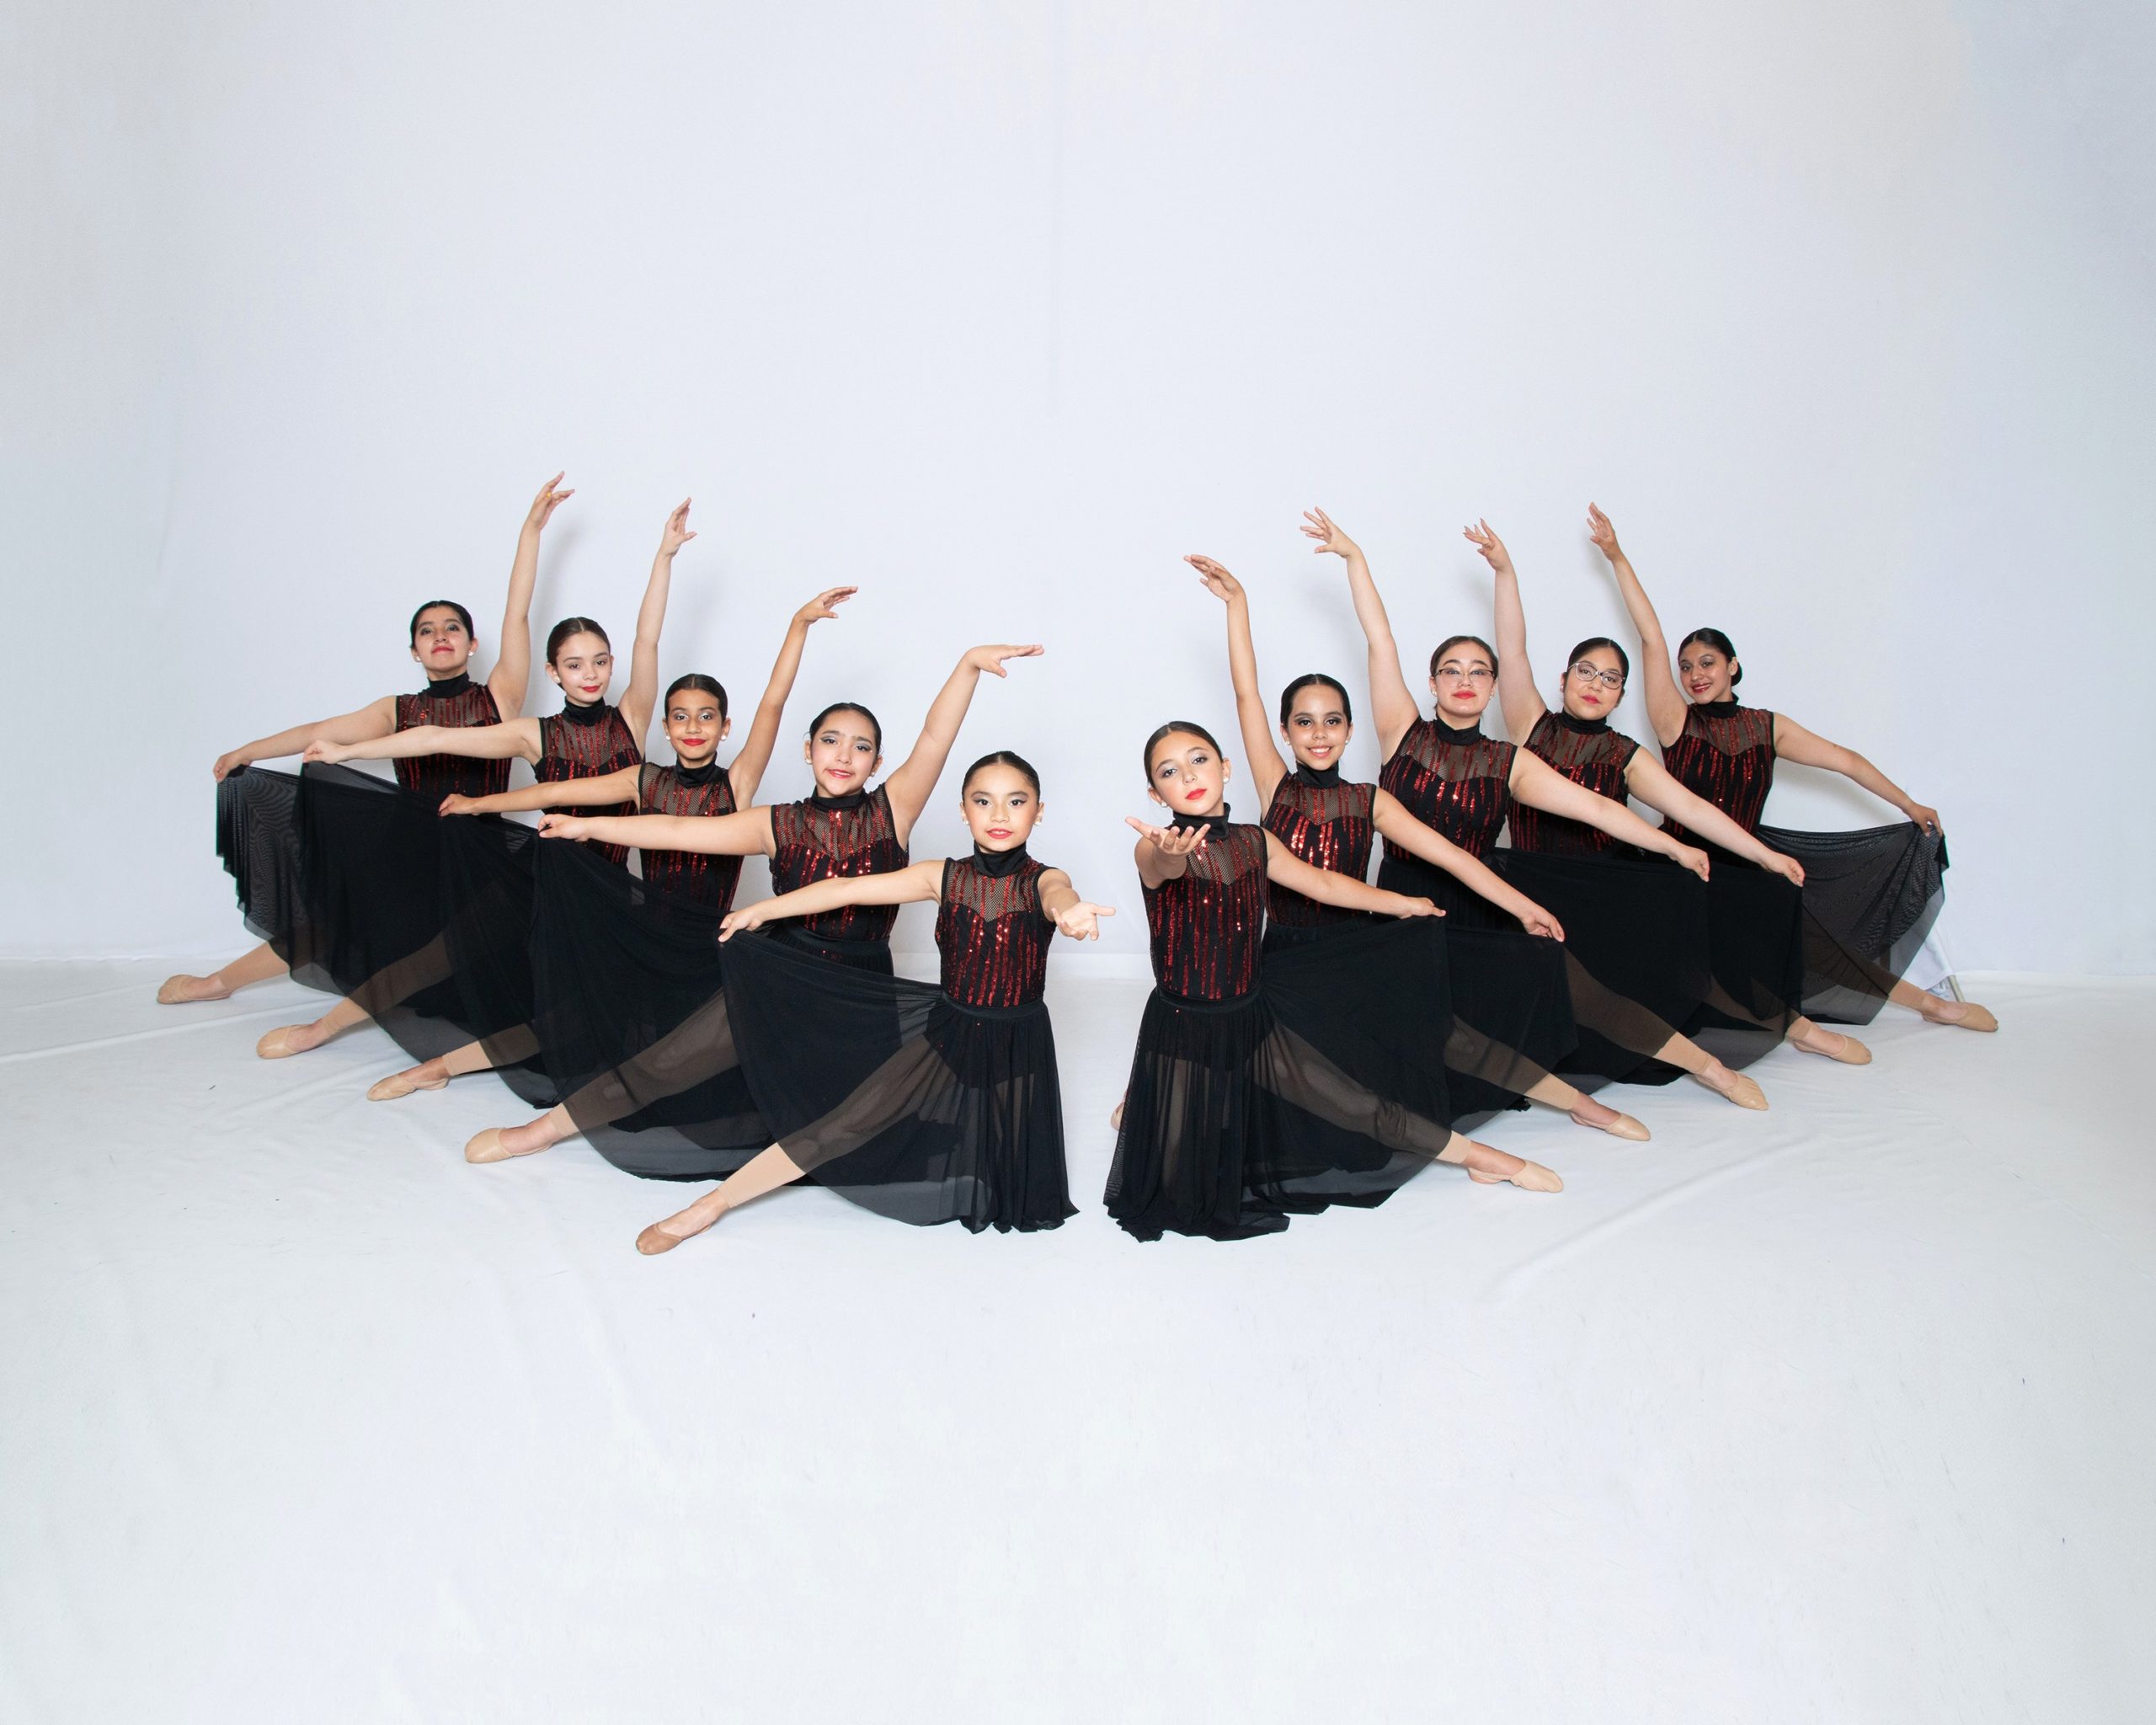 About Christine Belpedio School of Dance